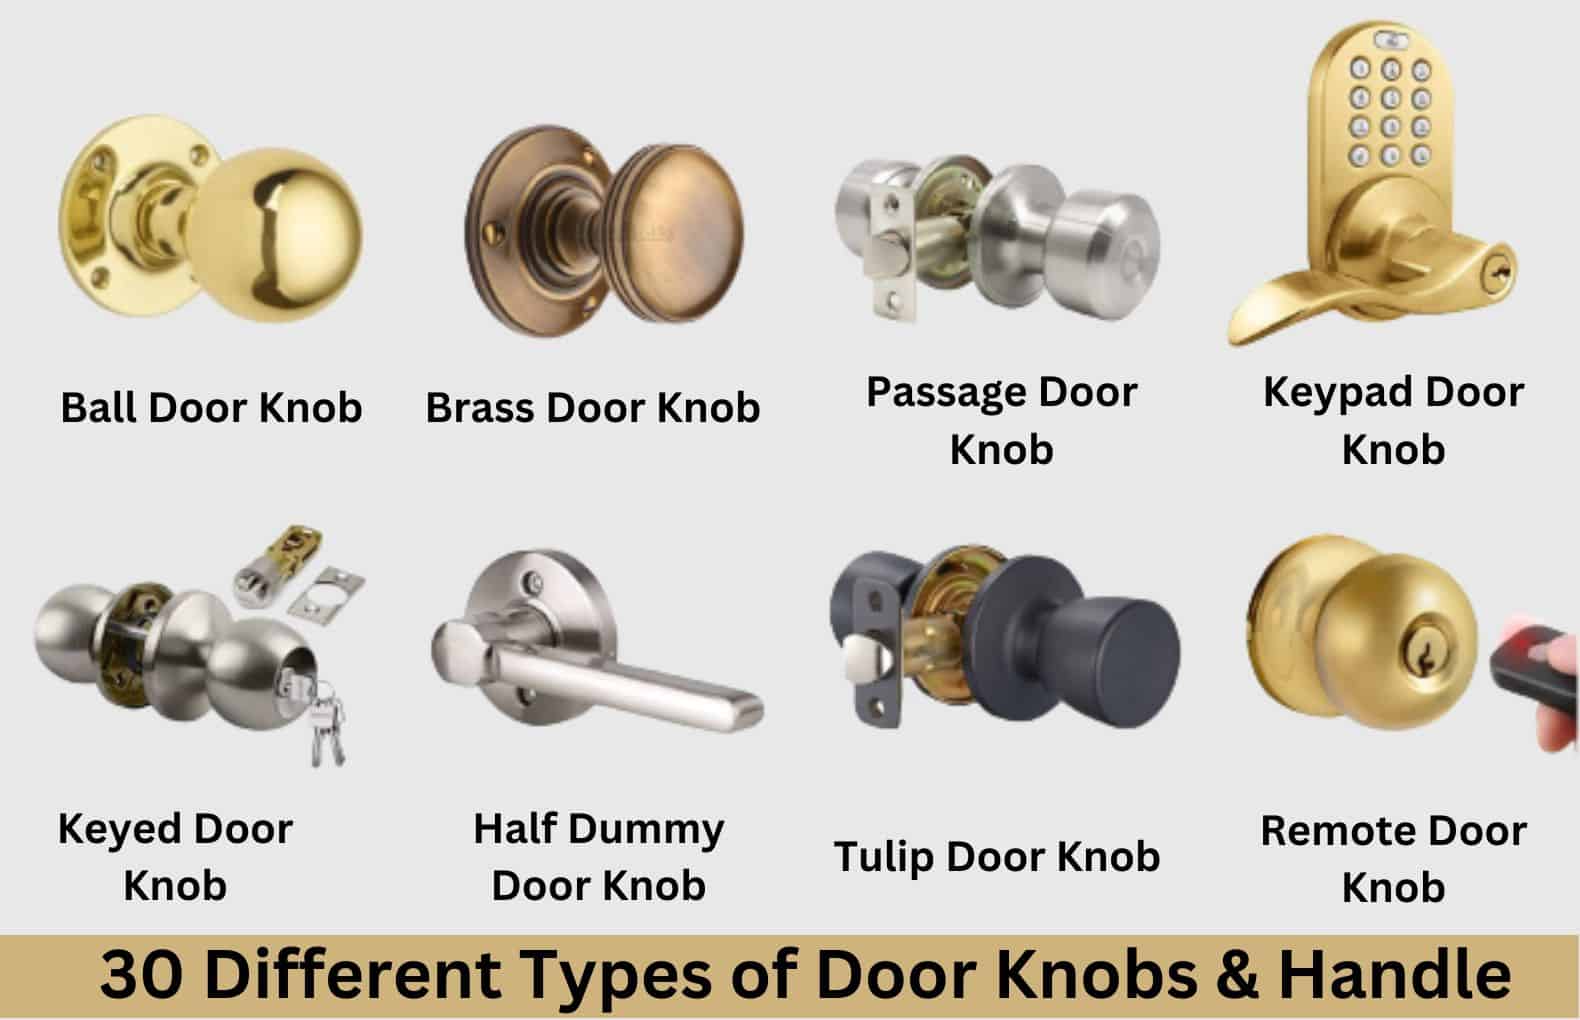 Door Knobs & Handles: Which Should You Choose?